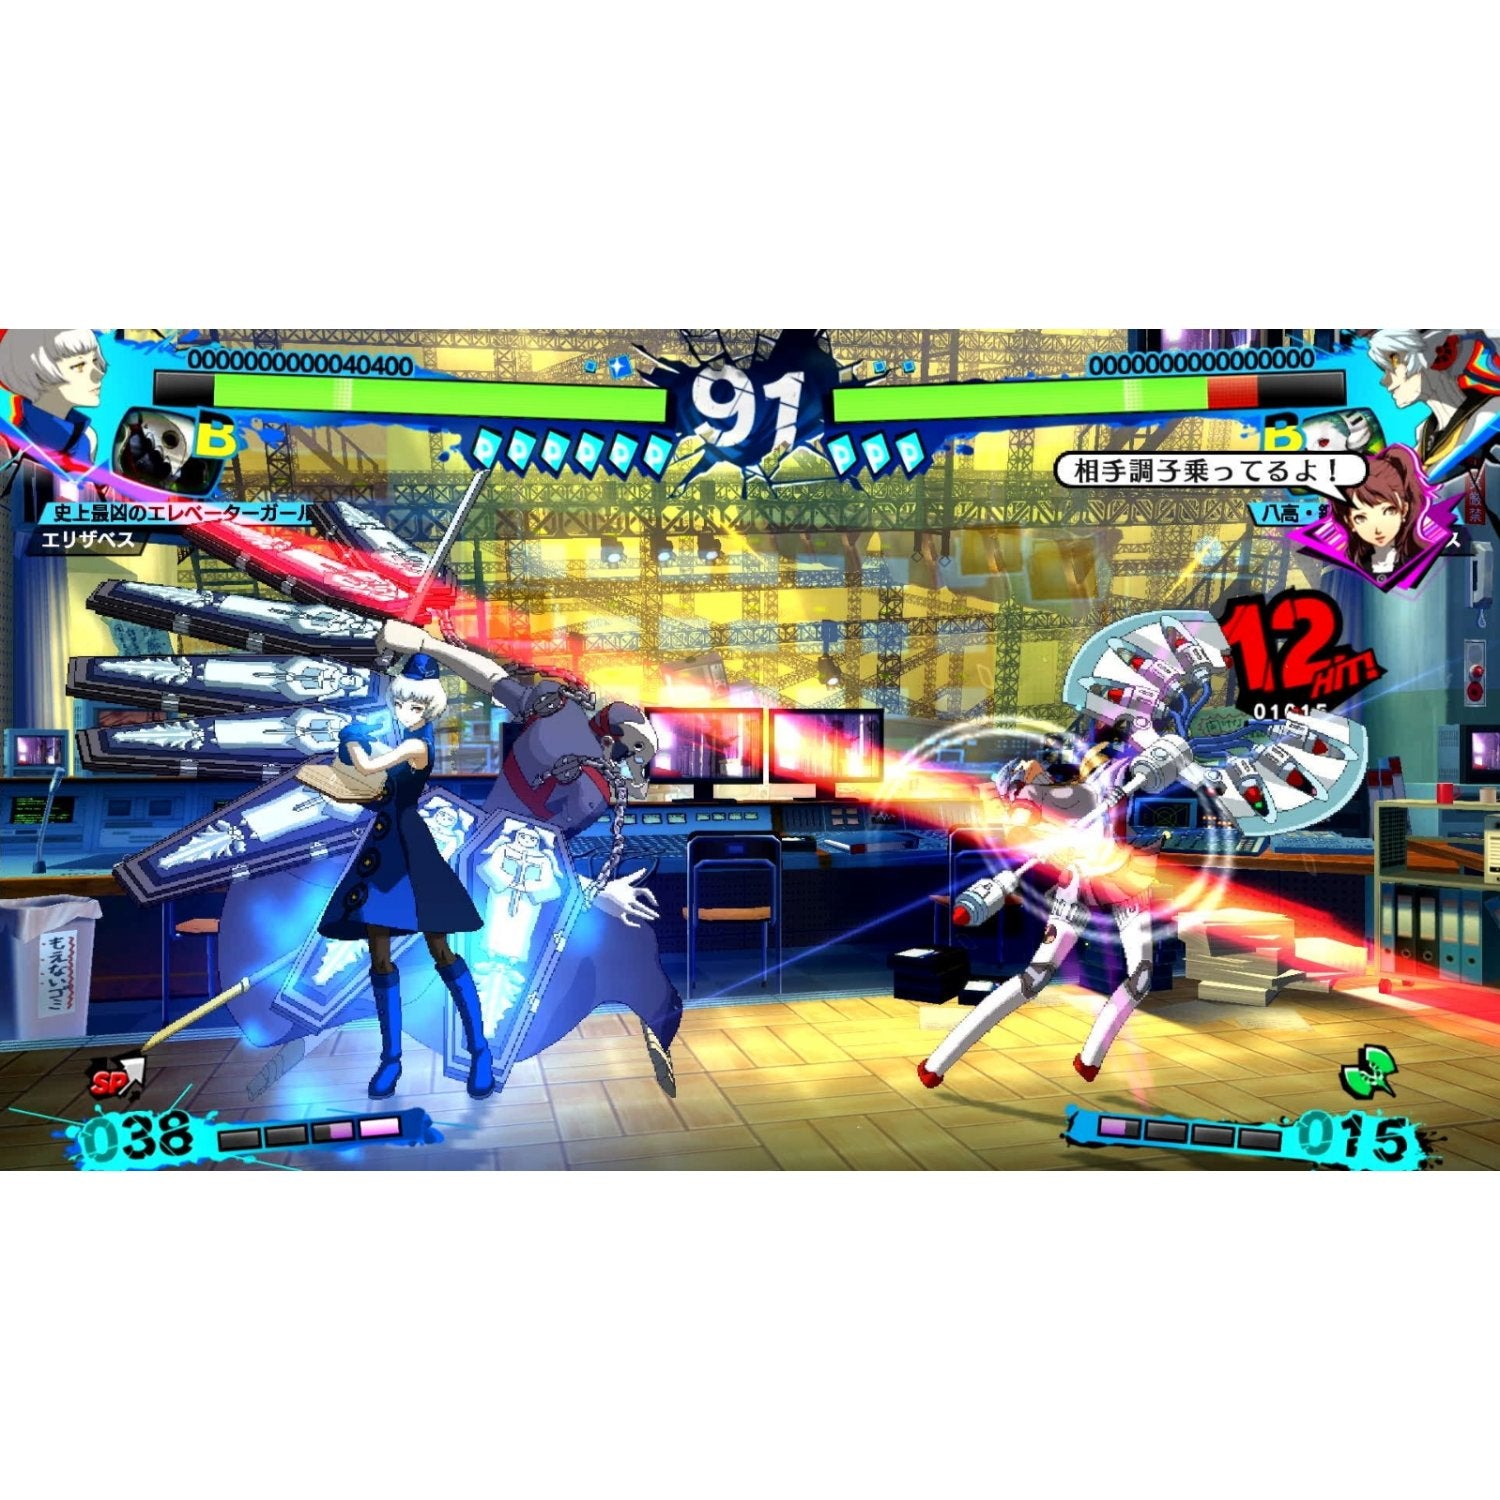 PS4 Persona 4 The Ultimax Ultra Suplex Hold (CHN)